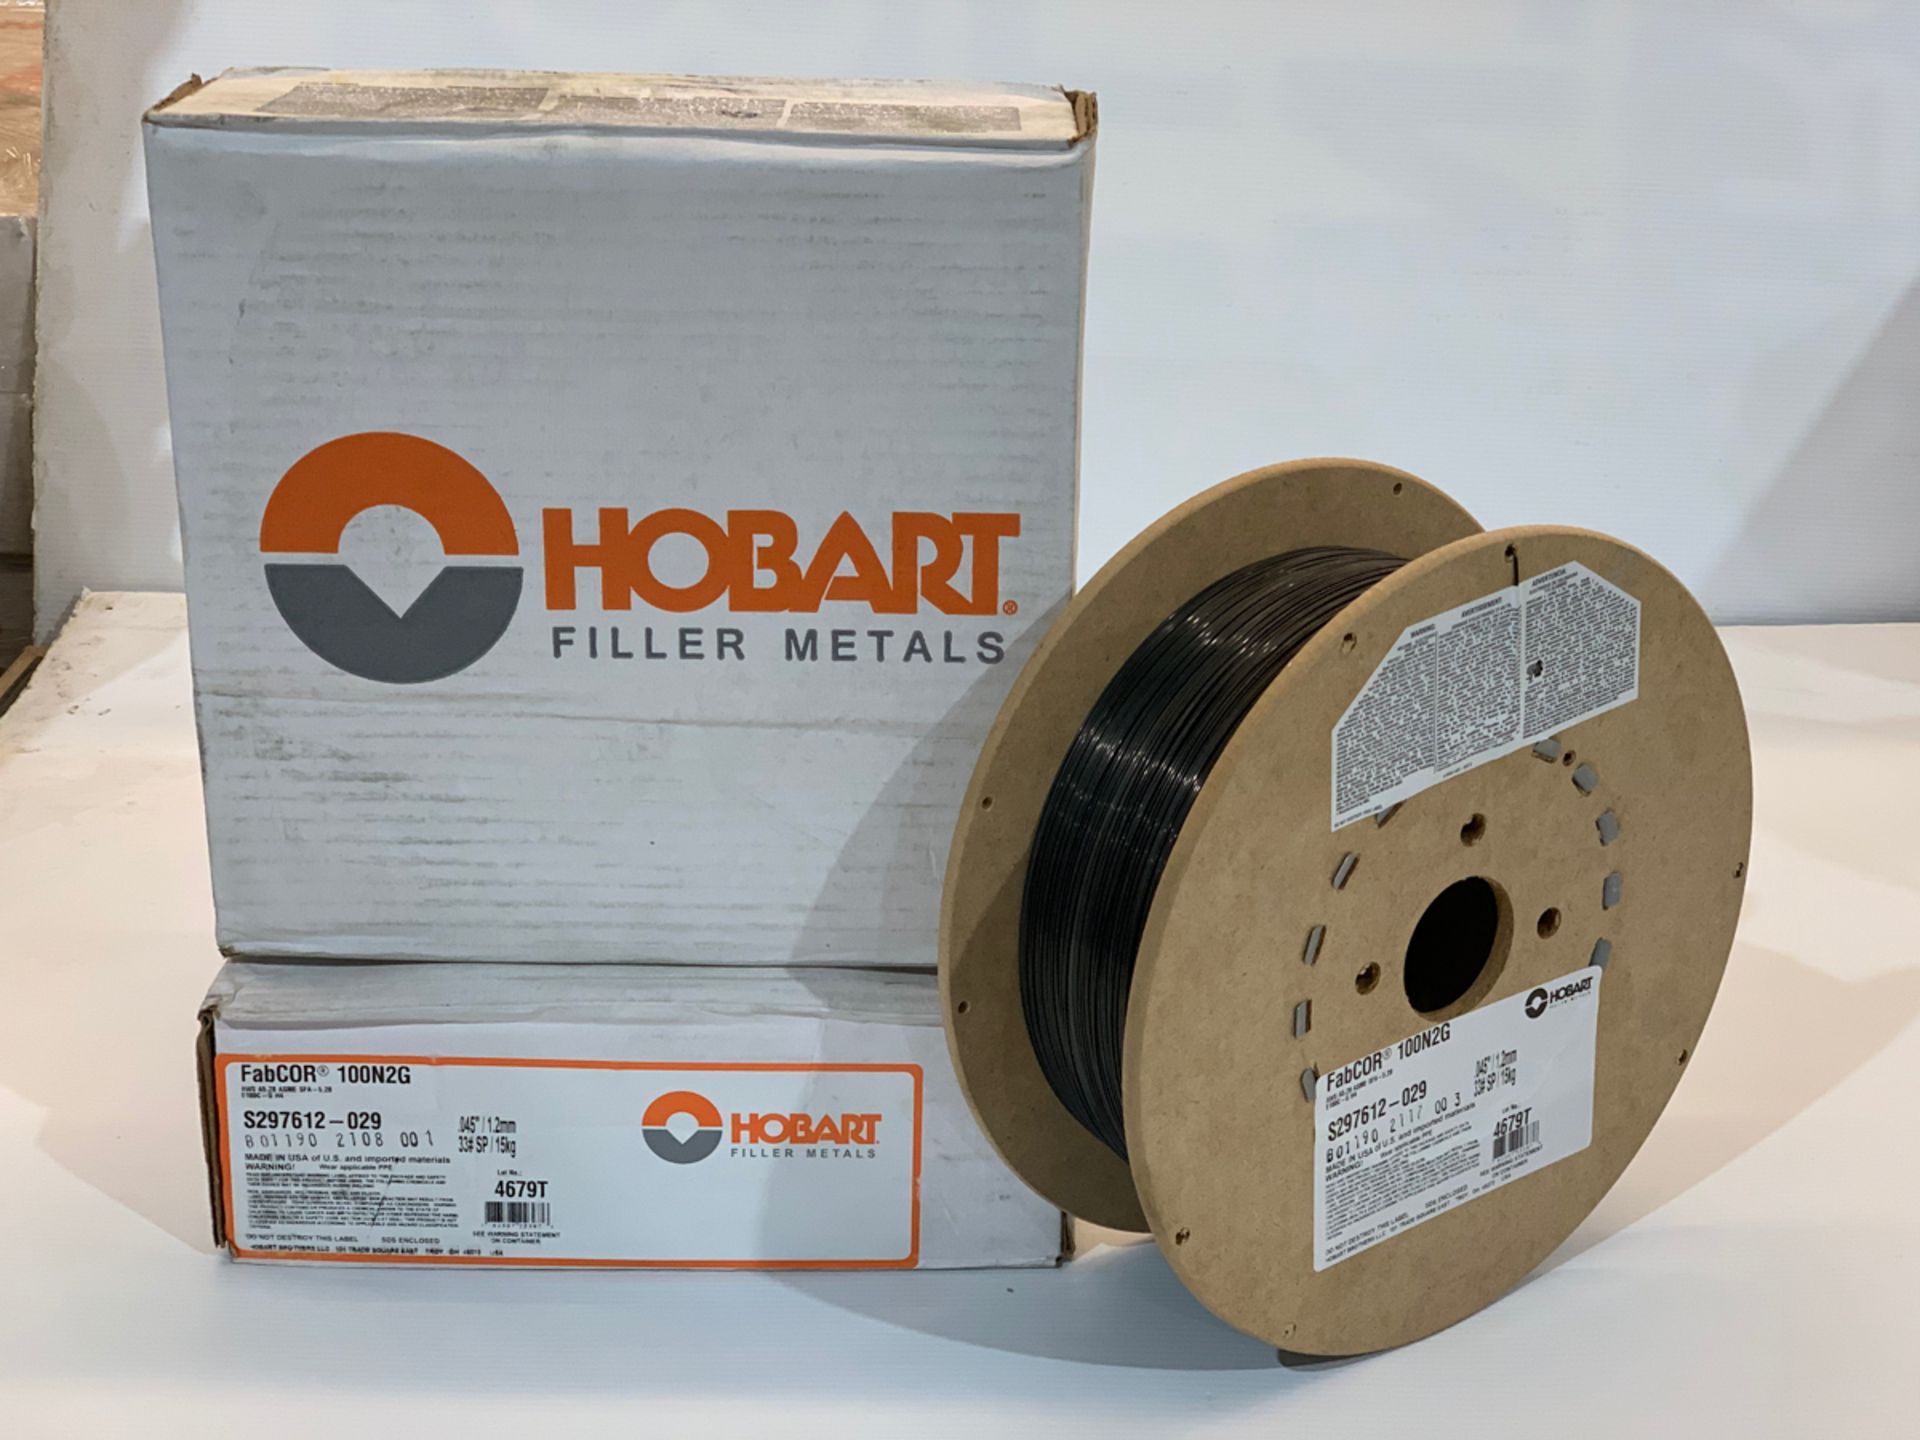 HOBART STL WELDING WIRE FABCOR 100N2G, DIA.: 0.045” (1.2mm), 15KG SPOOL/BOBINE *** DUE TO COVID